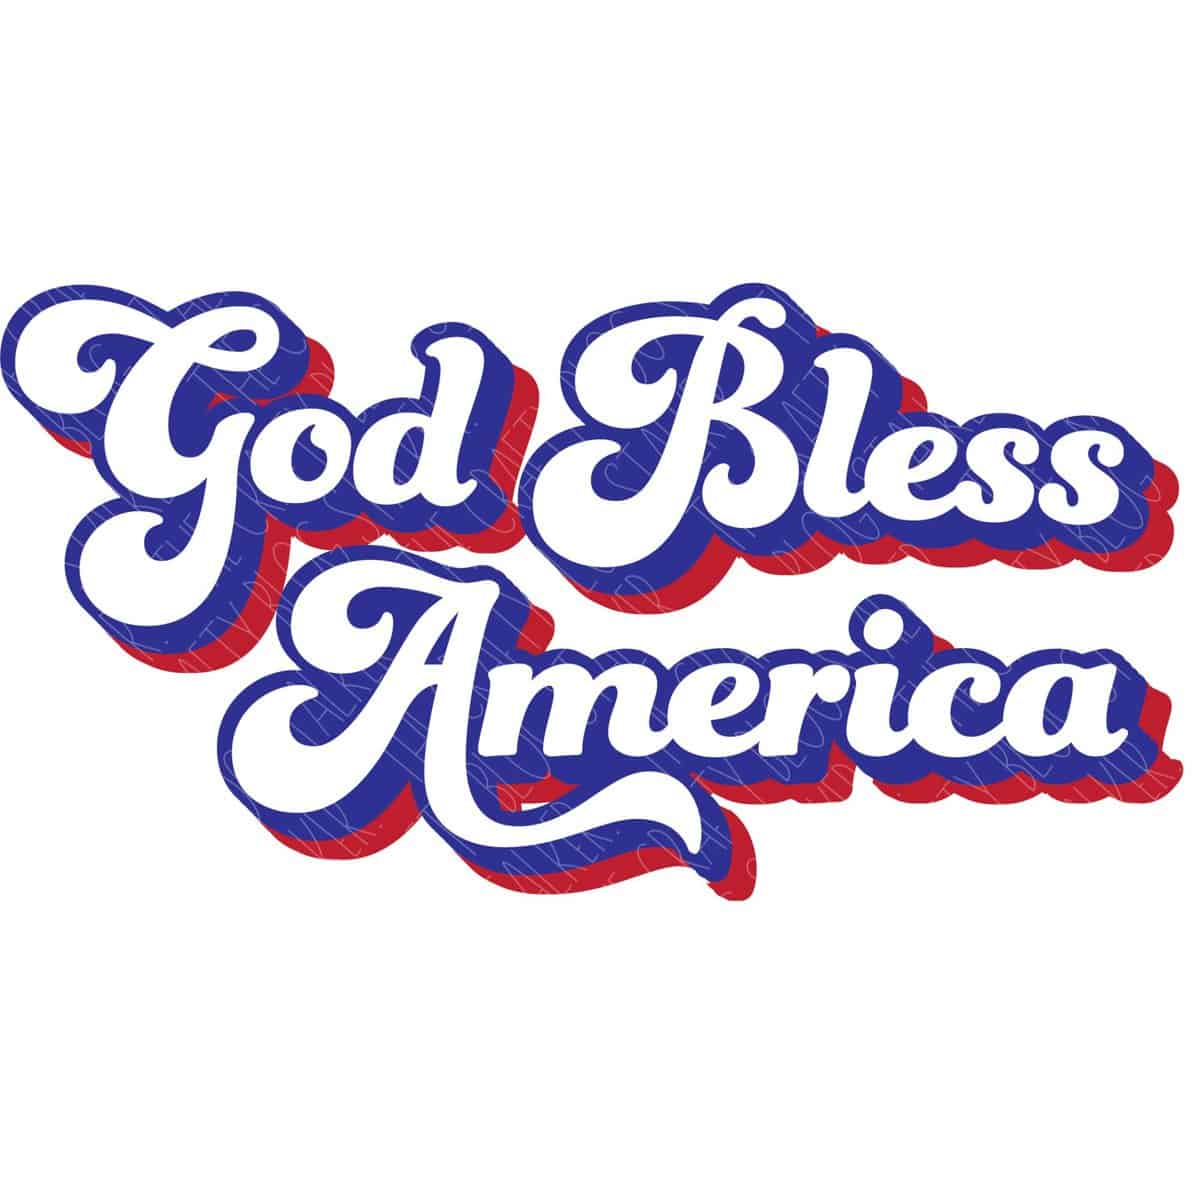 Retro Layered SVG Cut File: God Bless America.